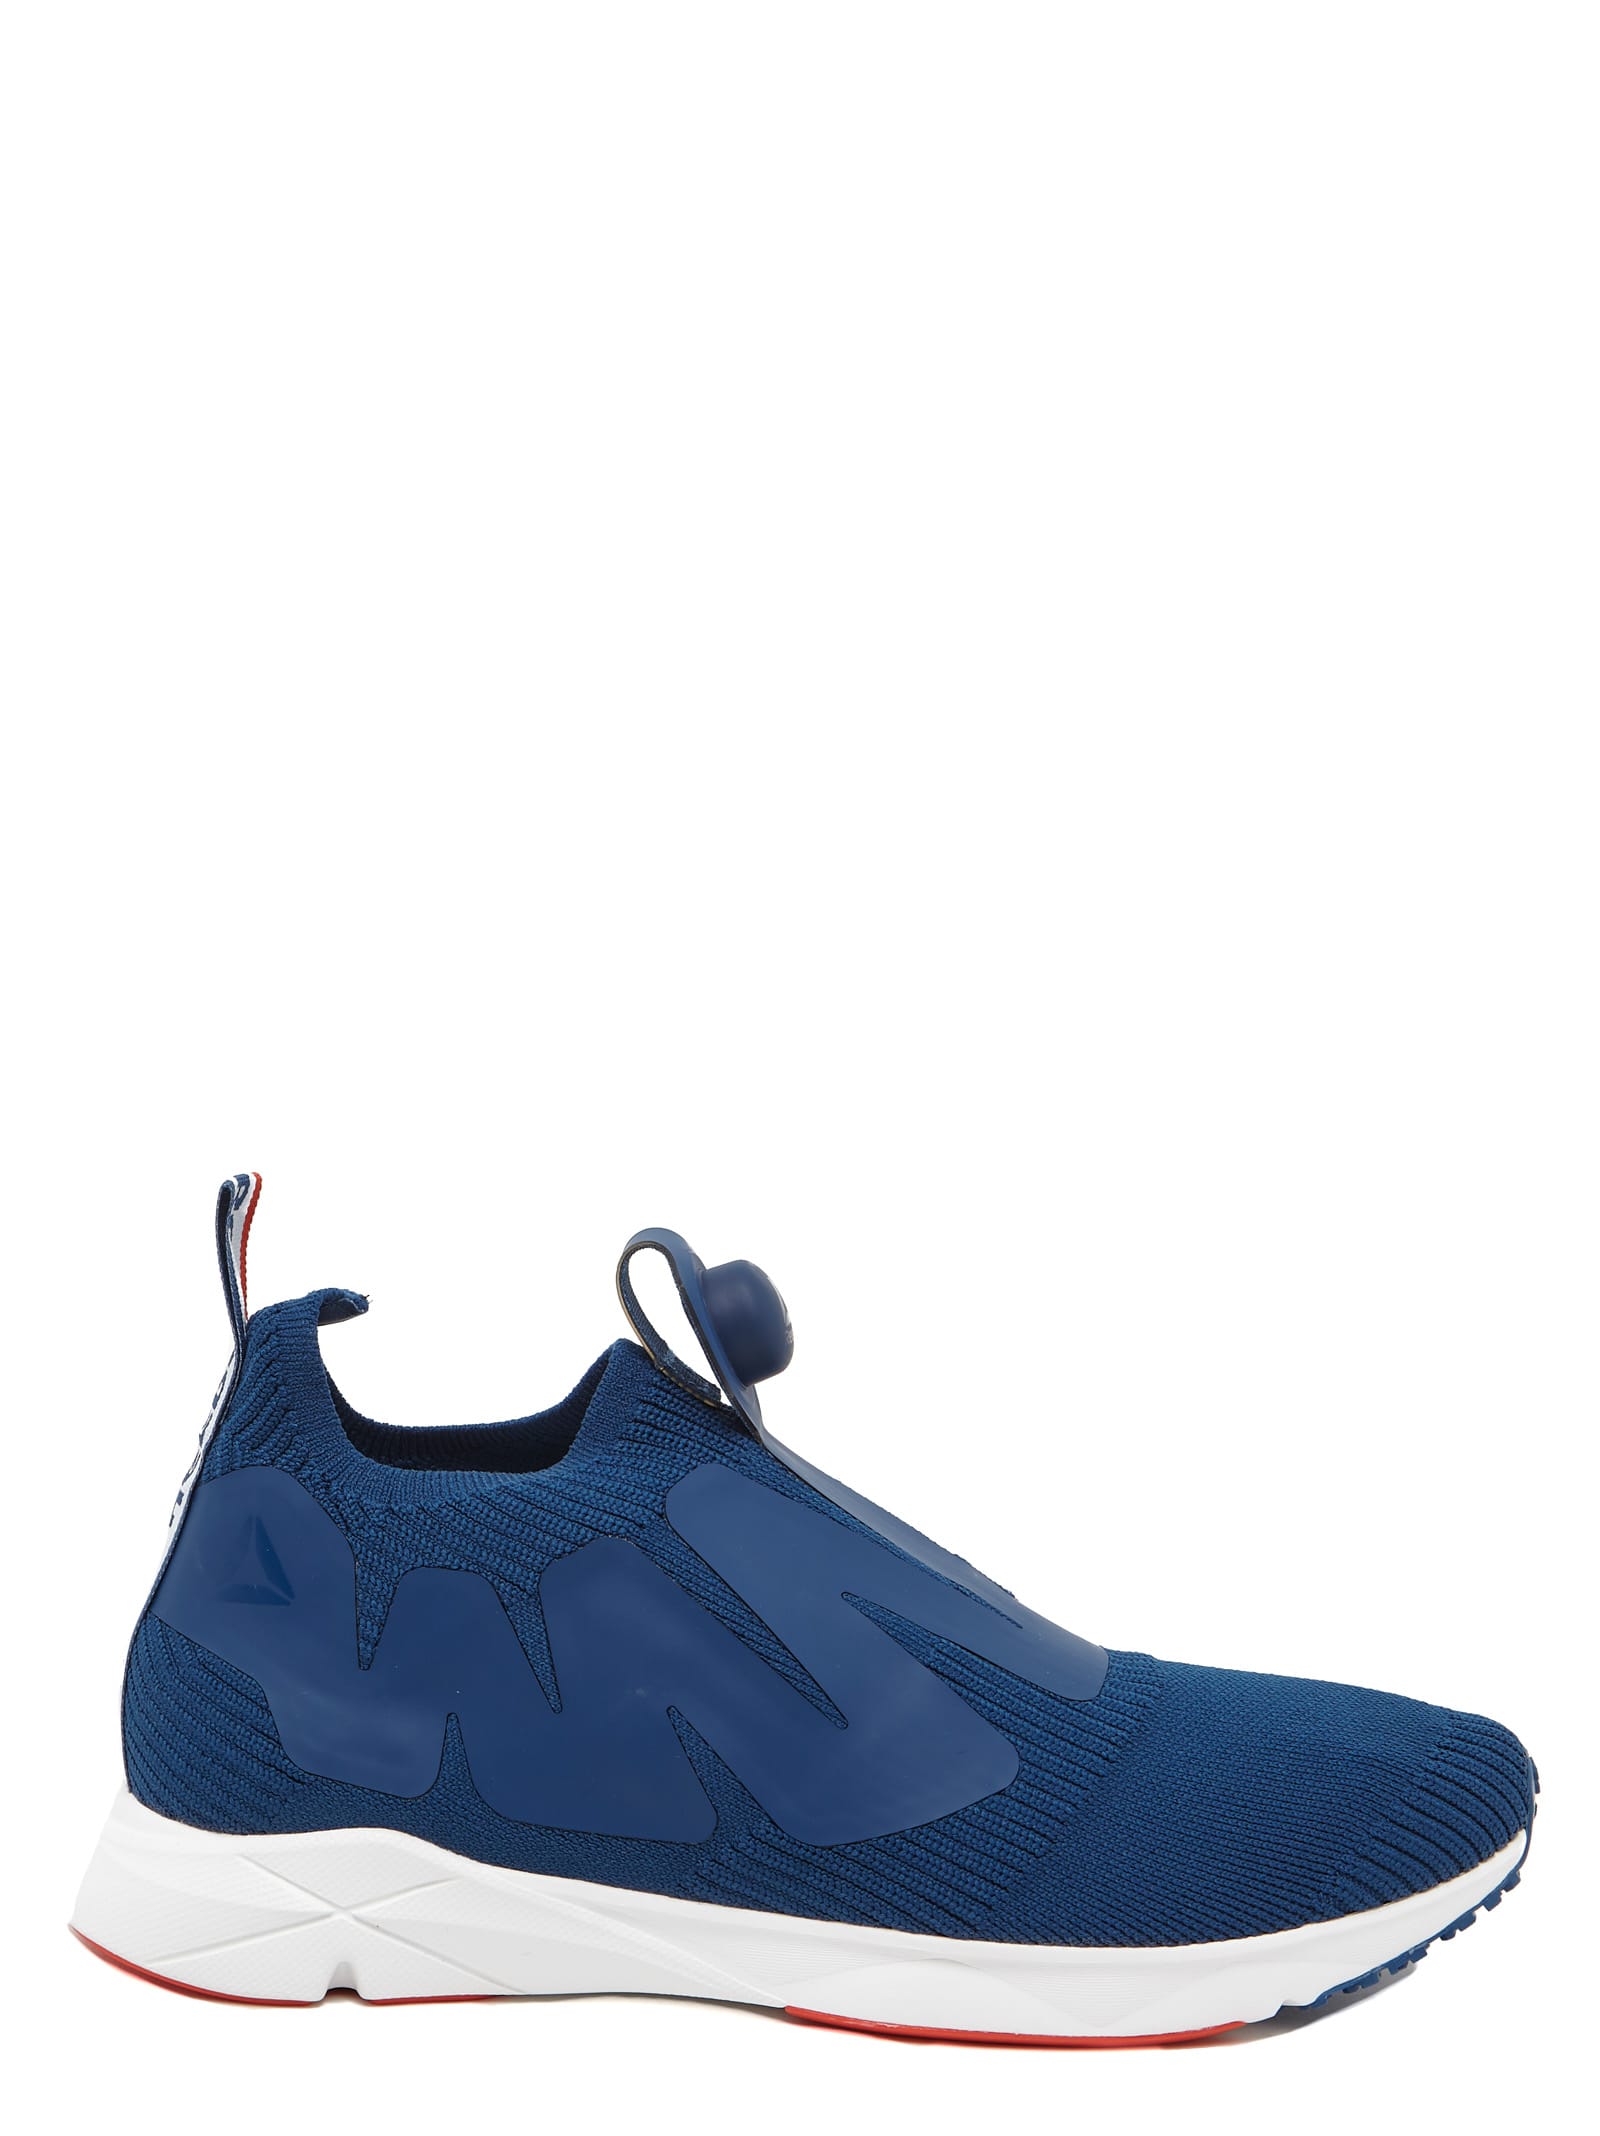 reebok pump shoes blue